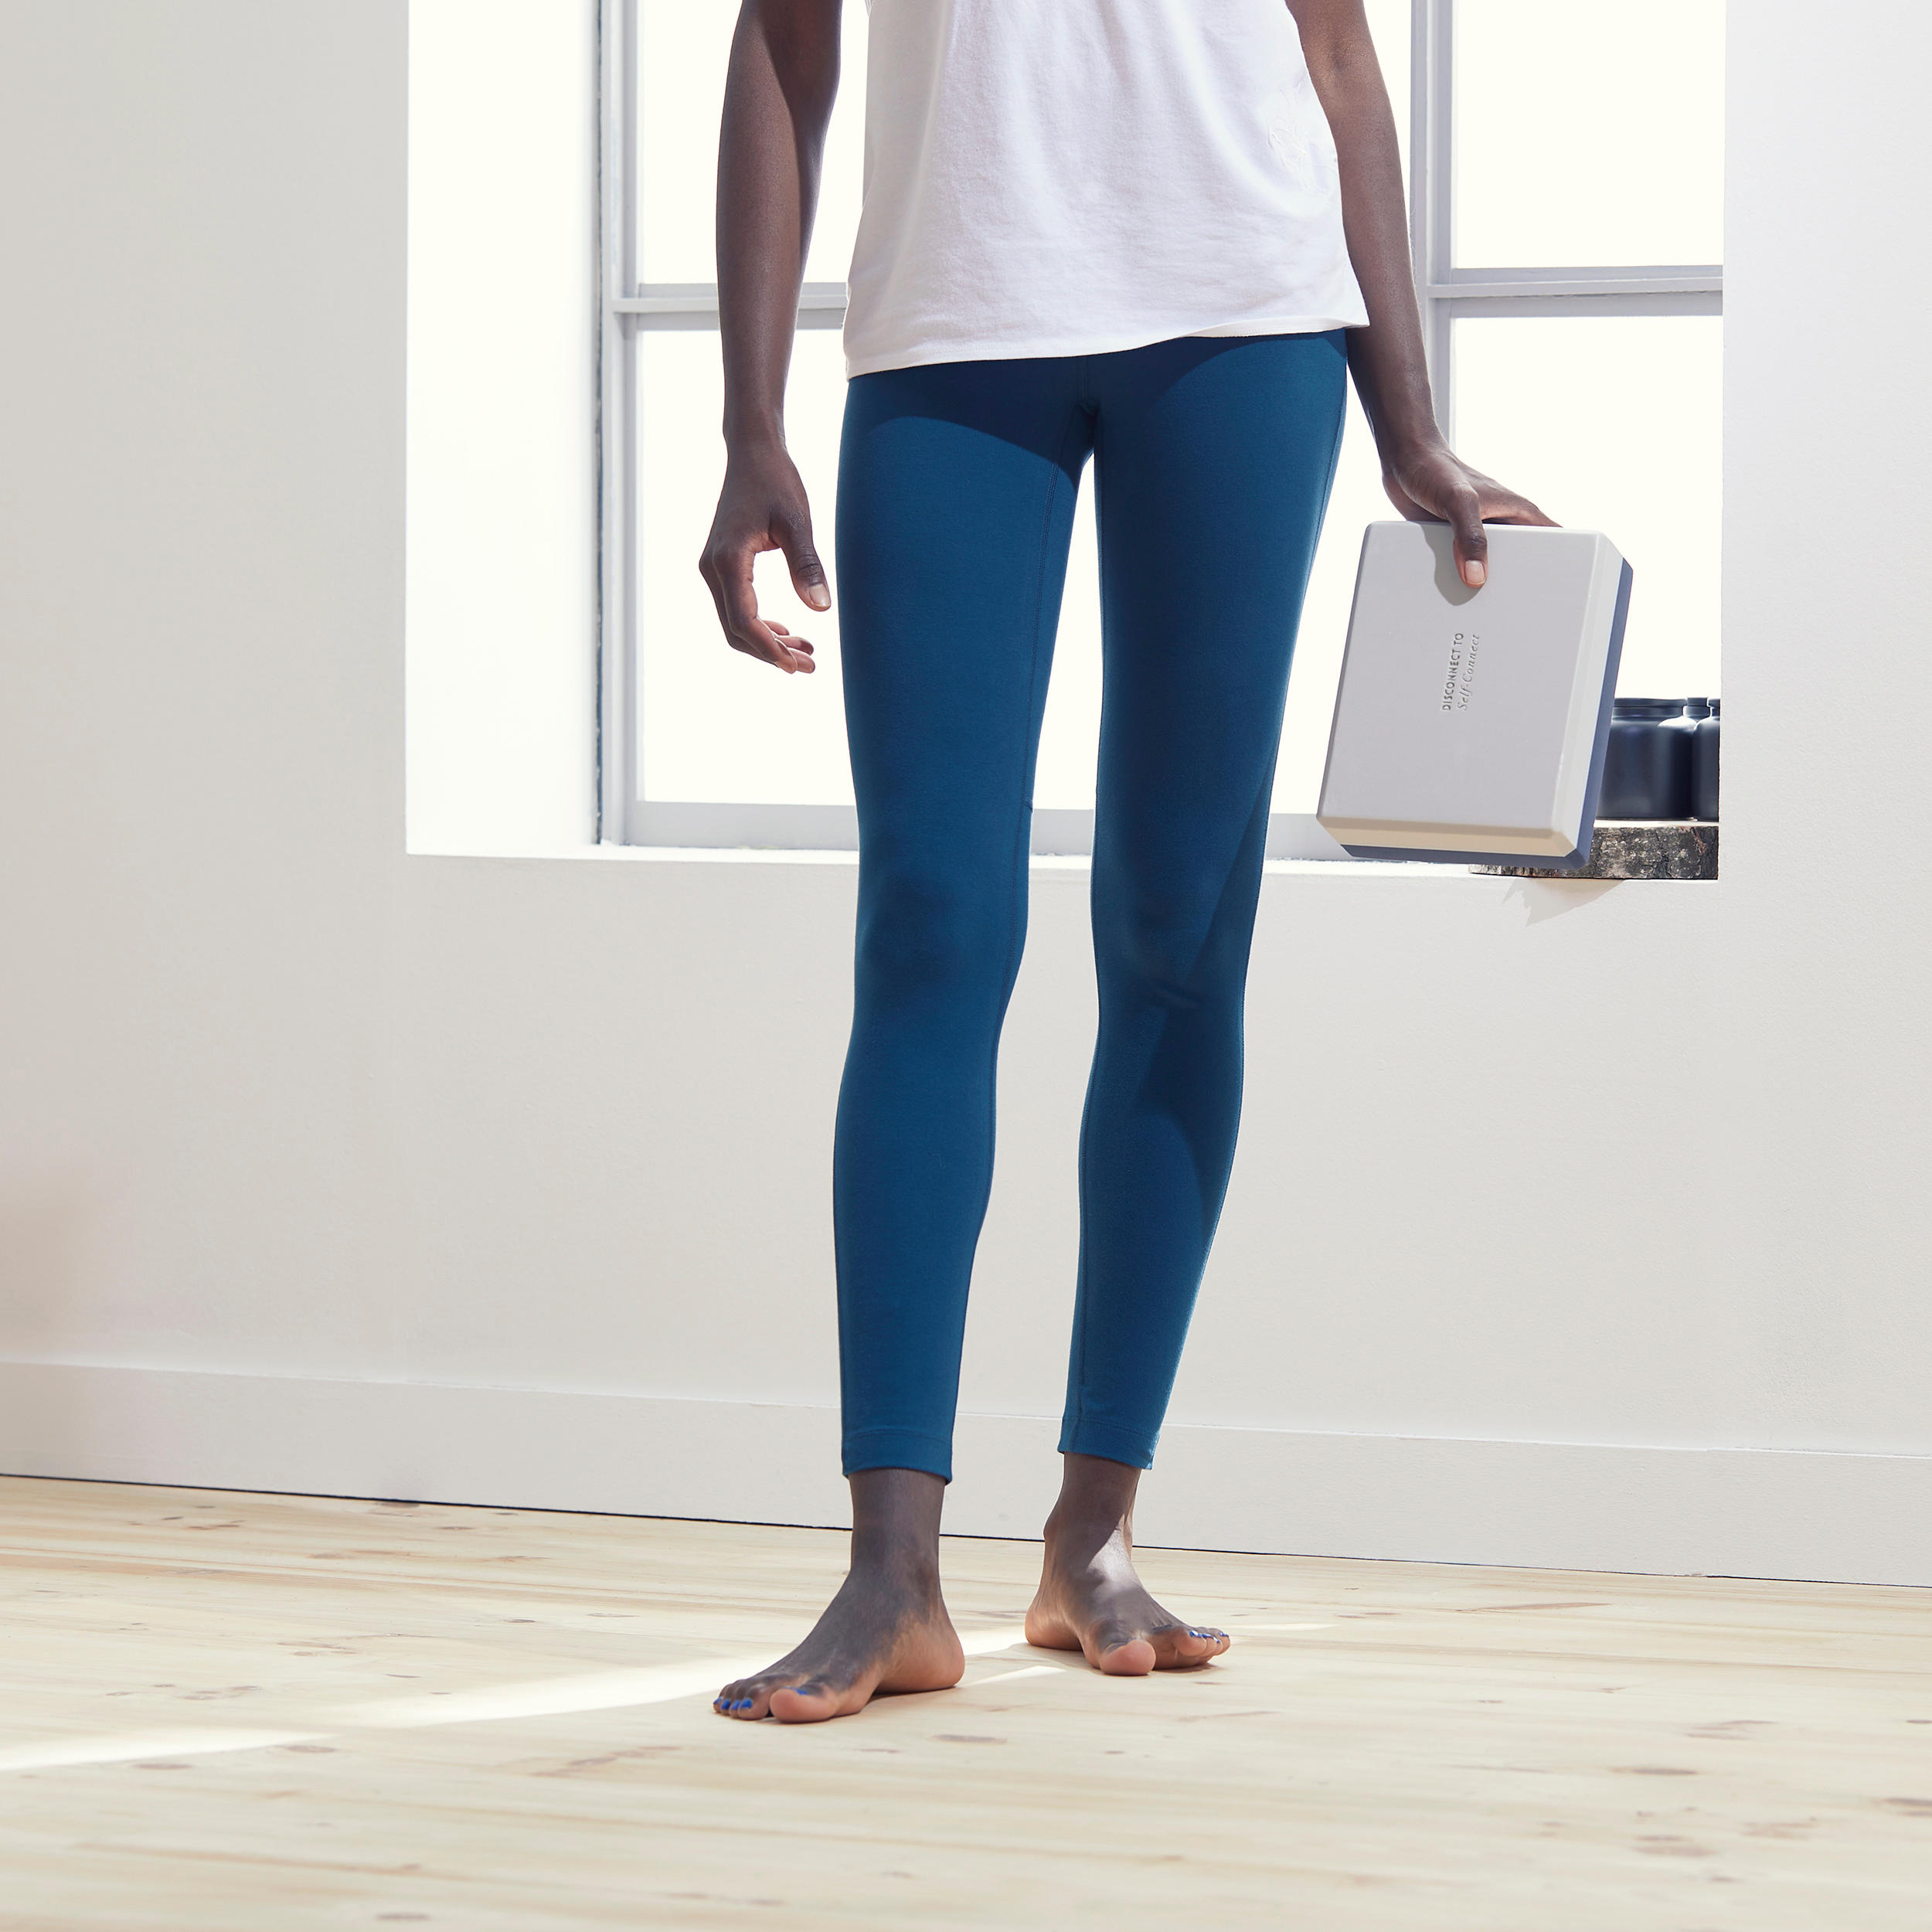 KIMJALY Women's Technical Cotton Yoga Leggings - Teal